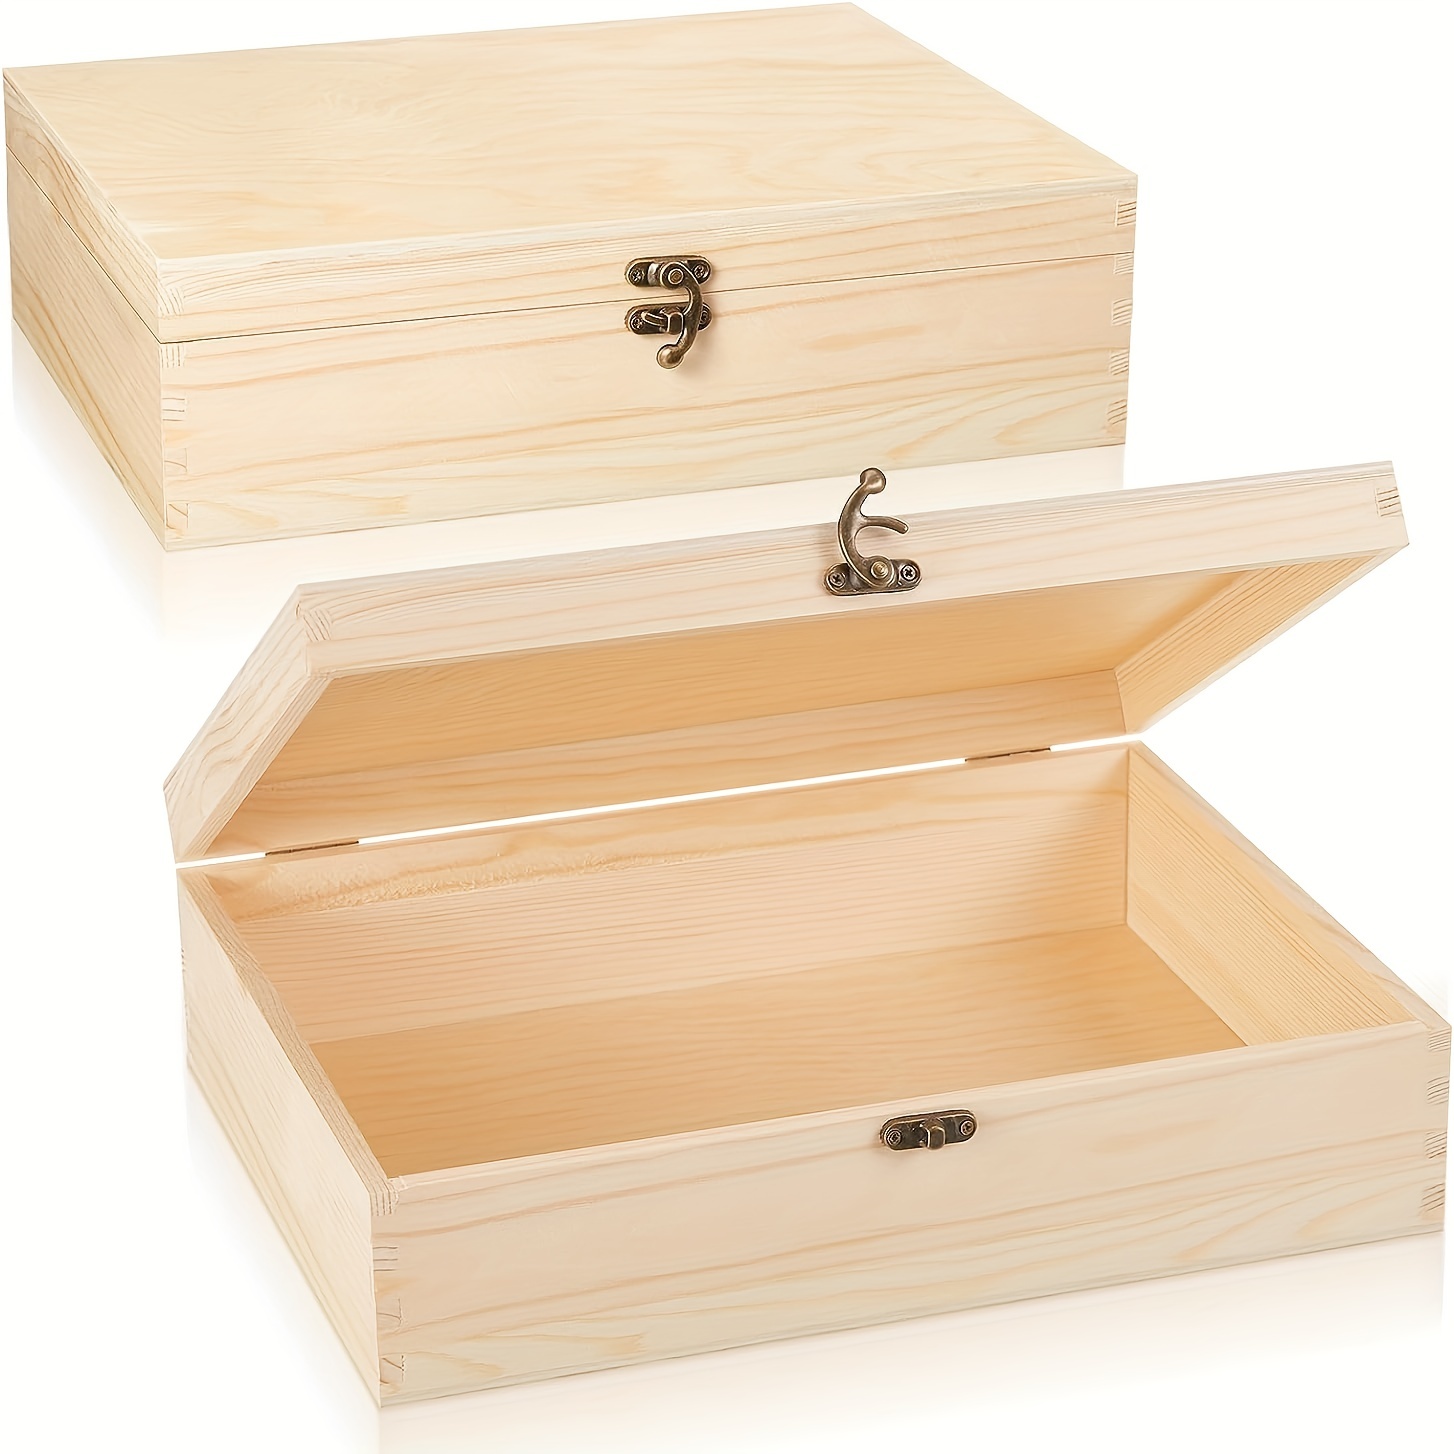 Wooden Box with Hinged Lid Keepsake Box Rectangle Plain Wood Box